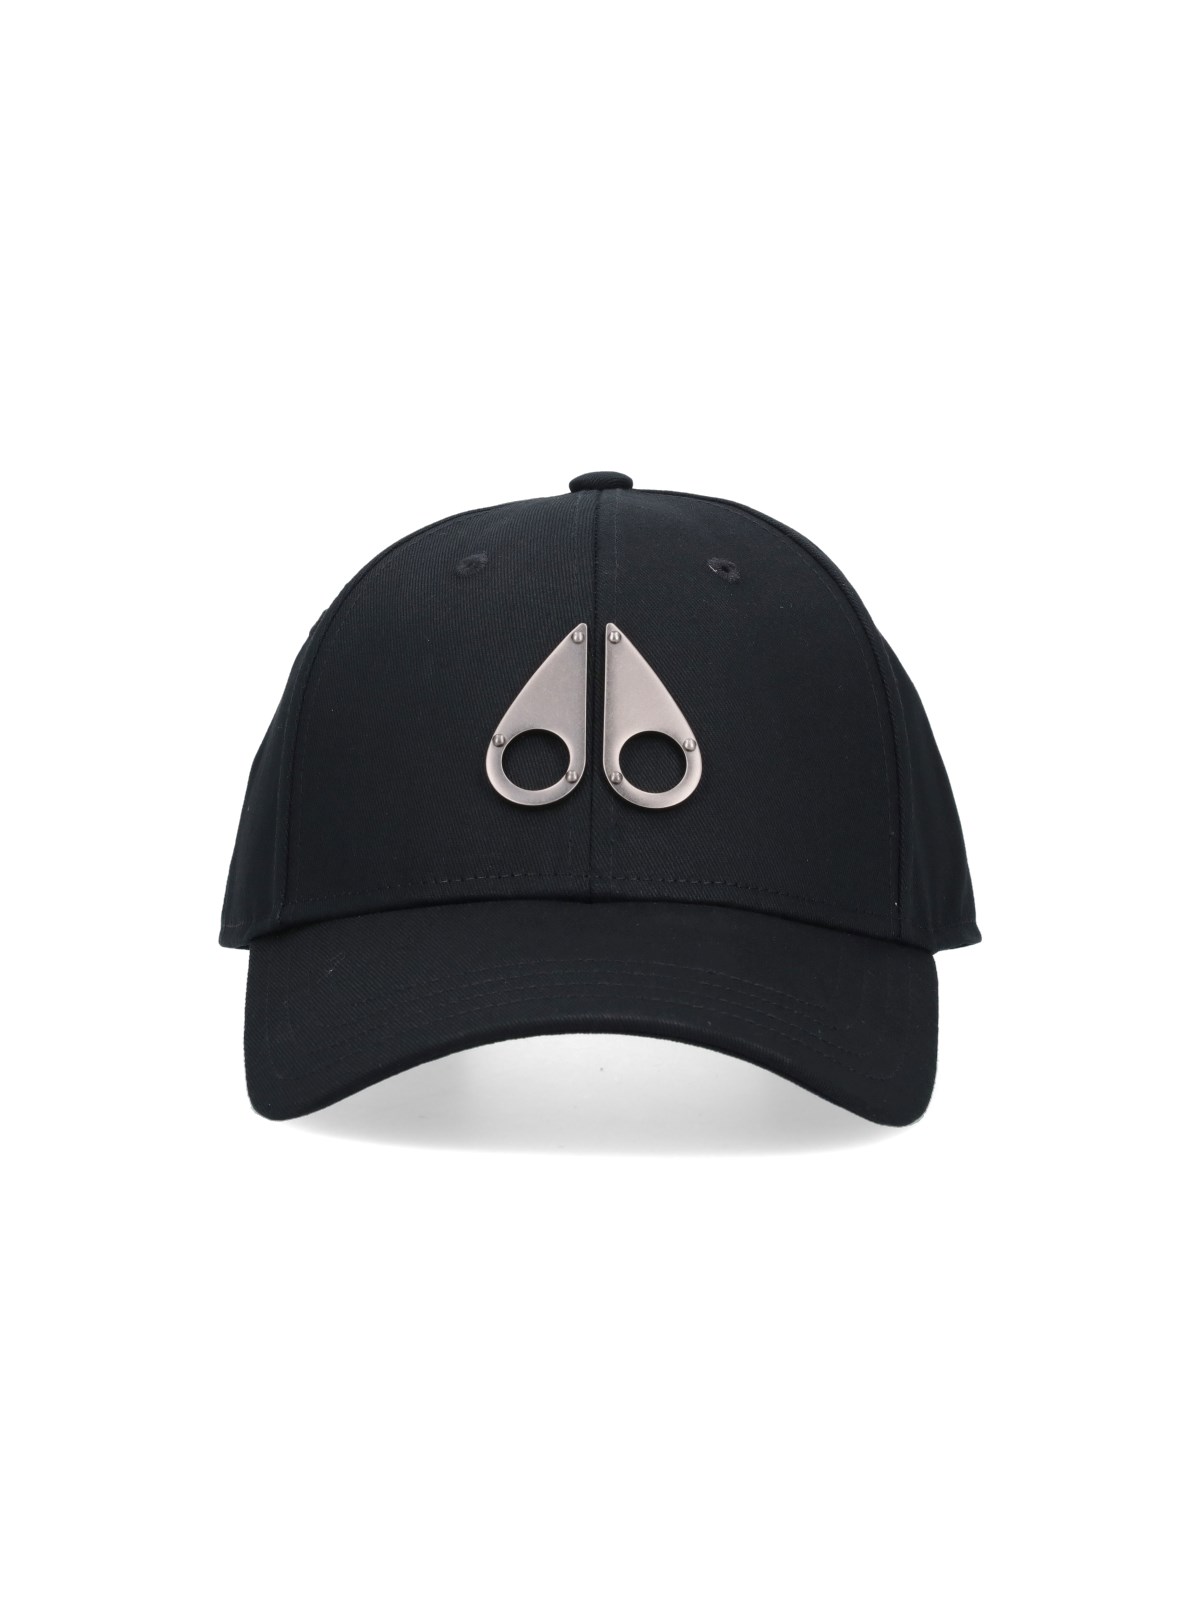 Moose Knuckles Logo Baseball Cap In Black  